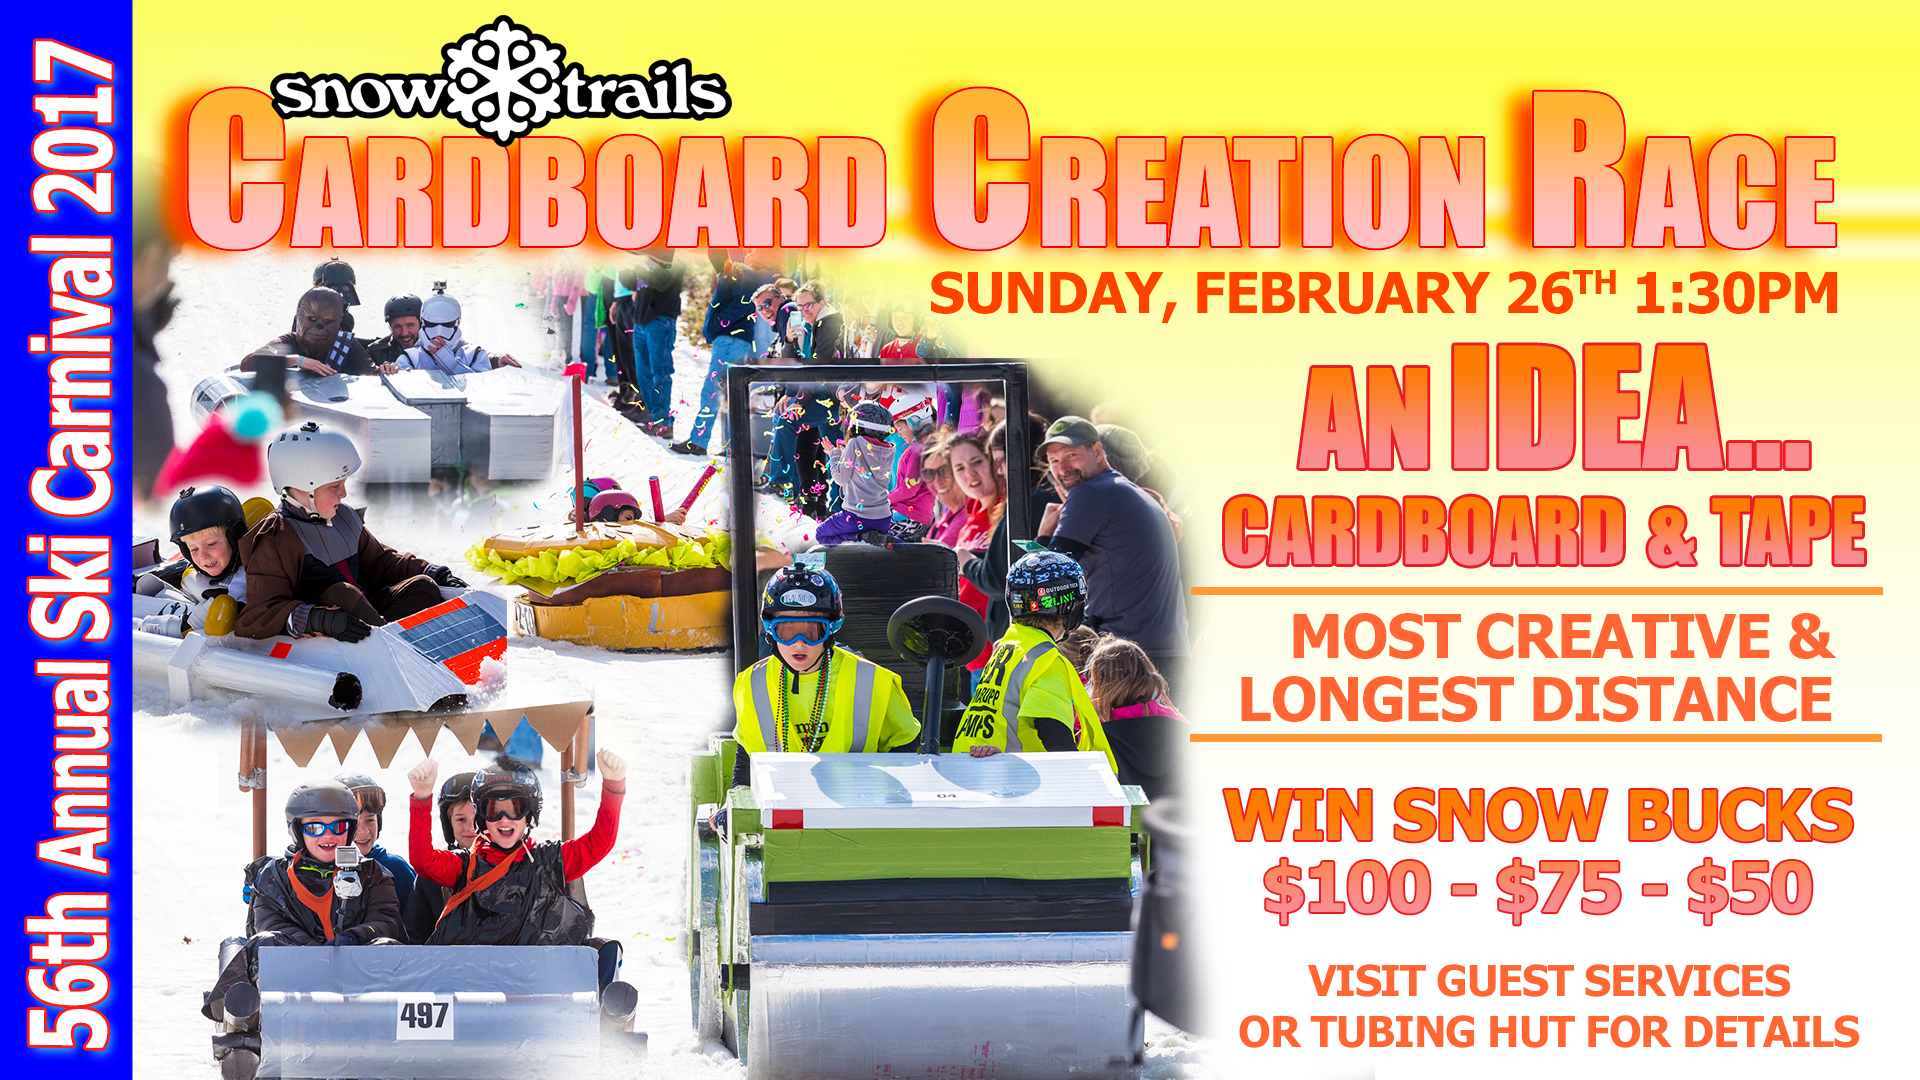 56th Annual Ski Carnival Cardboard Creation Race February 26th Snow-Trails